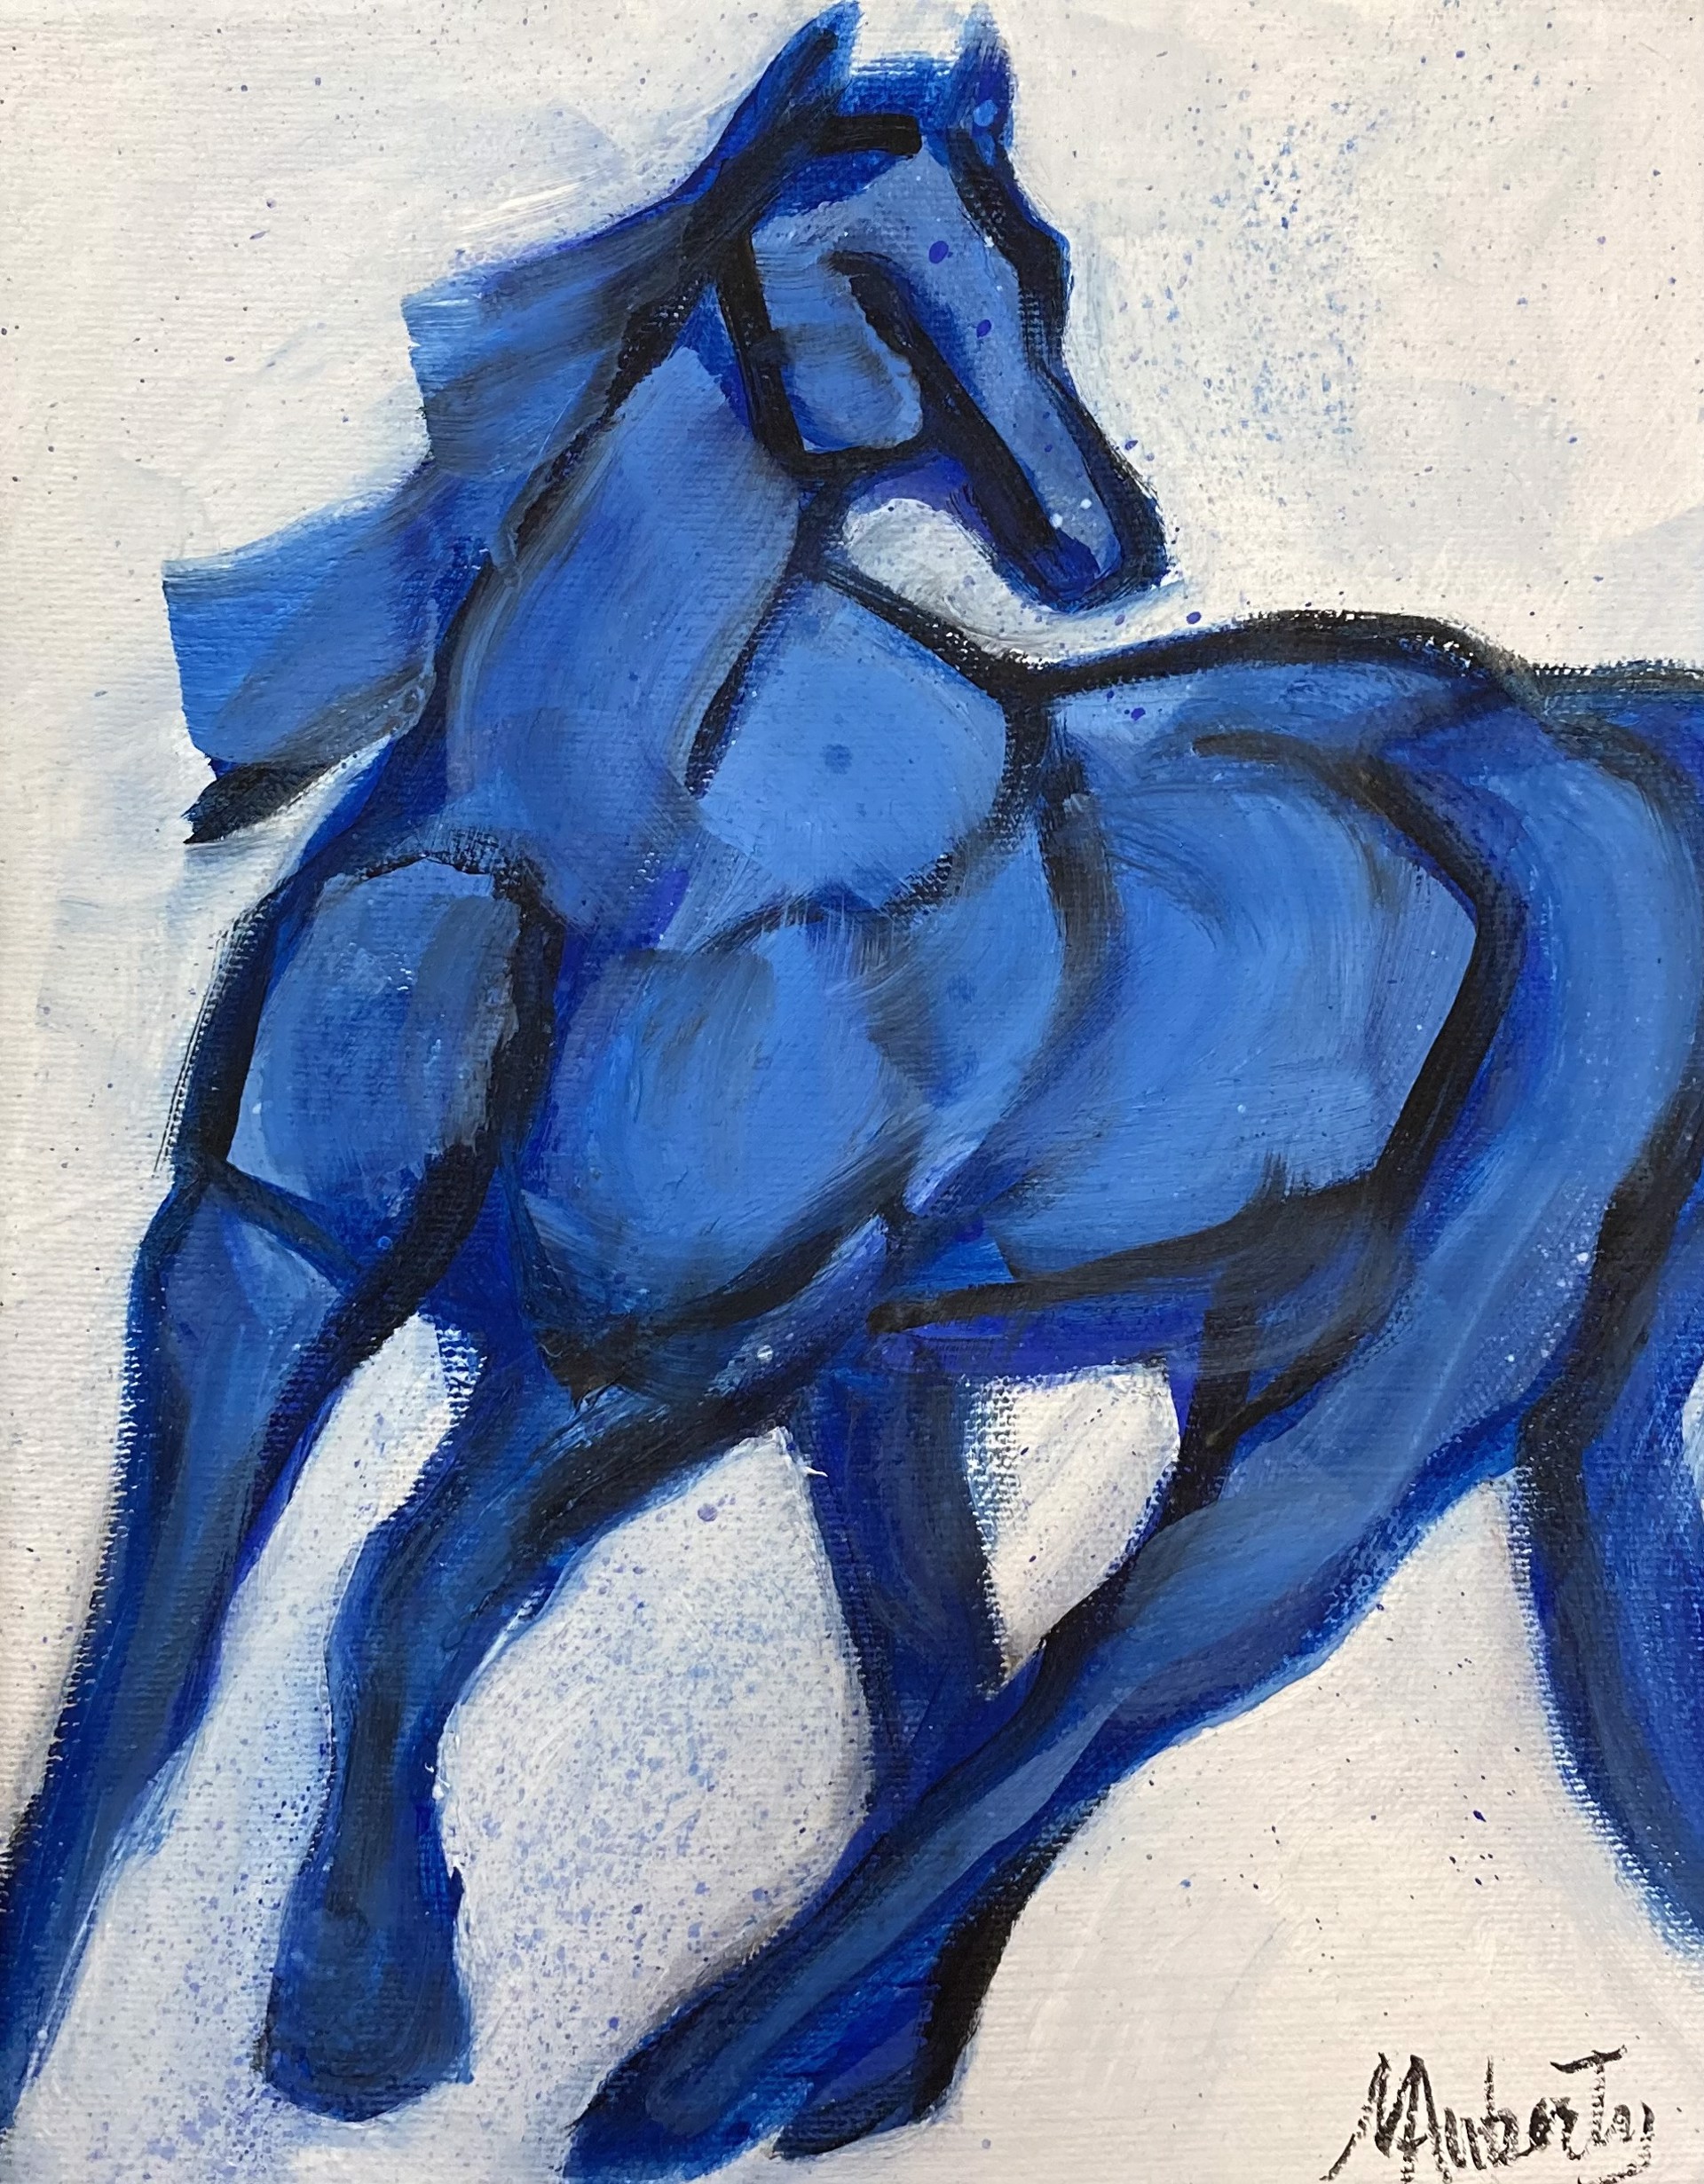 Blue Horse Study #14 by Melissa Auberty